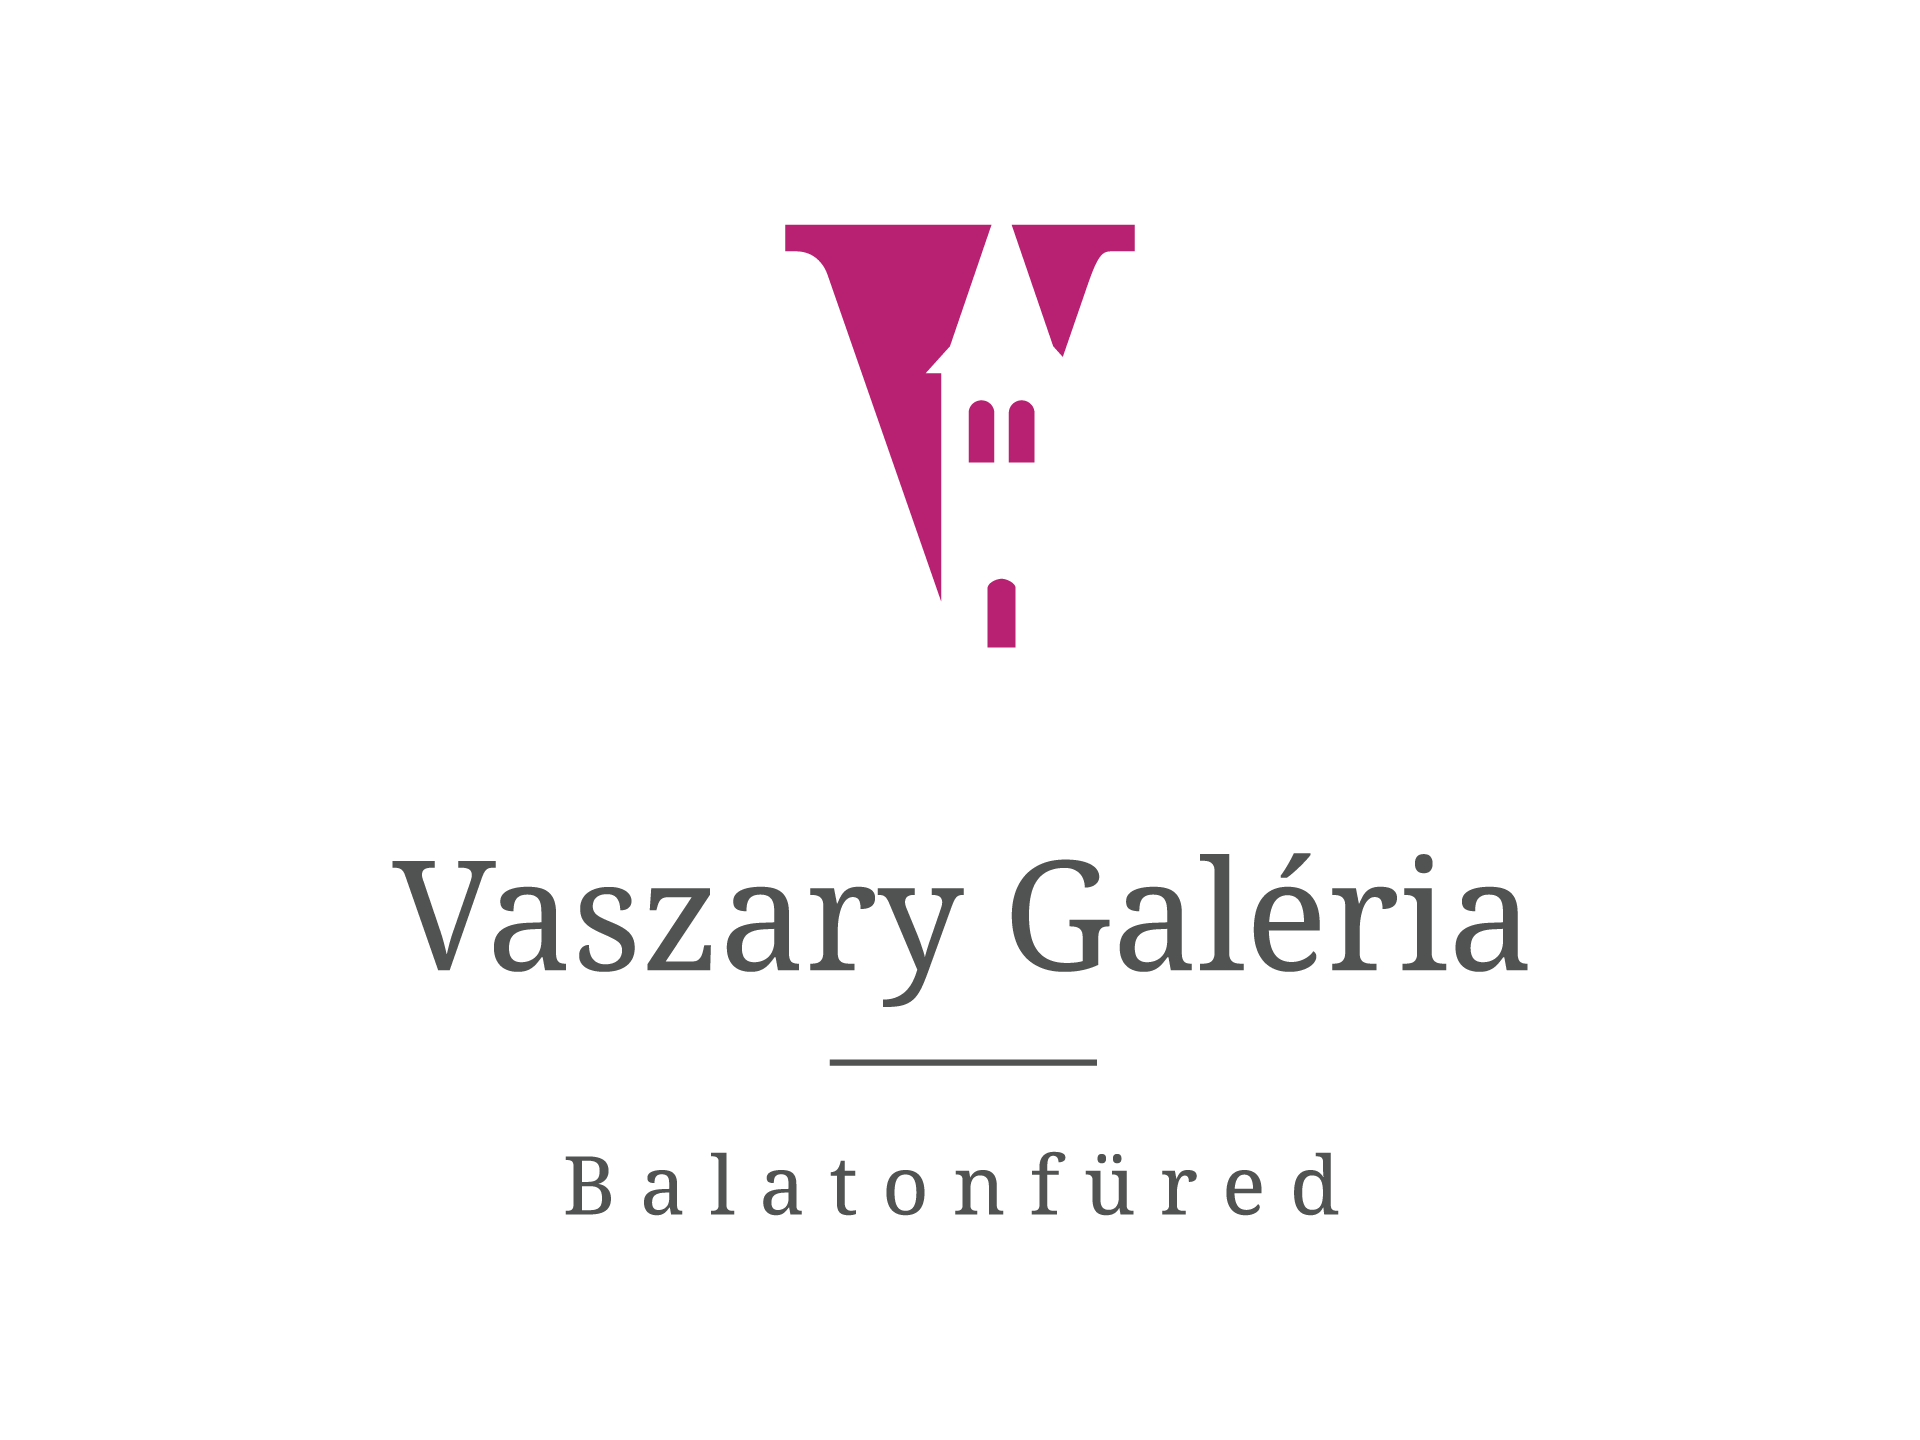 Vaszary Galéria